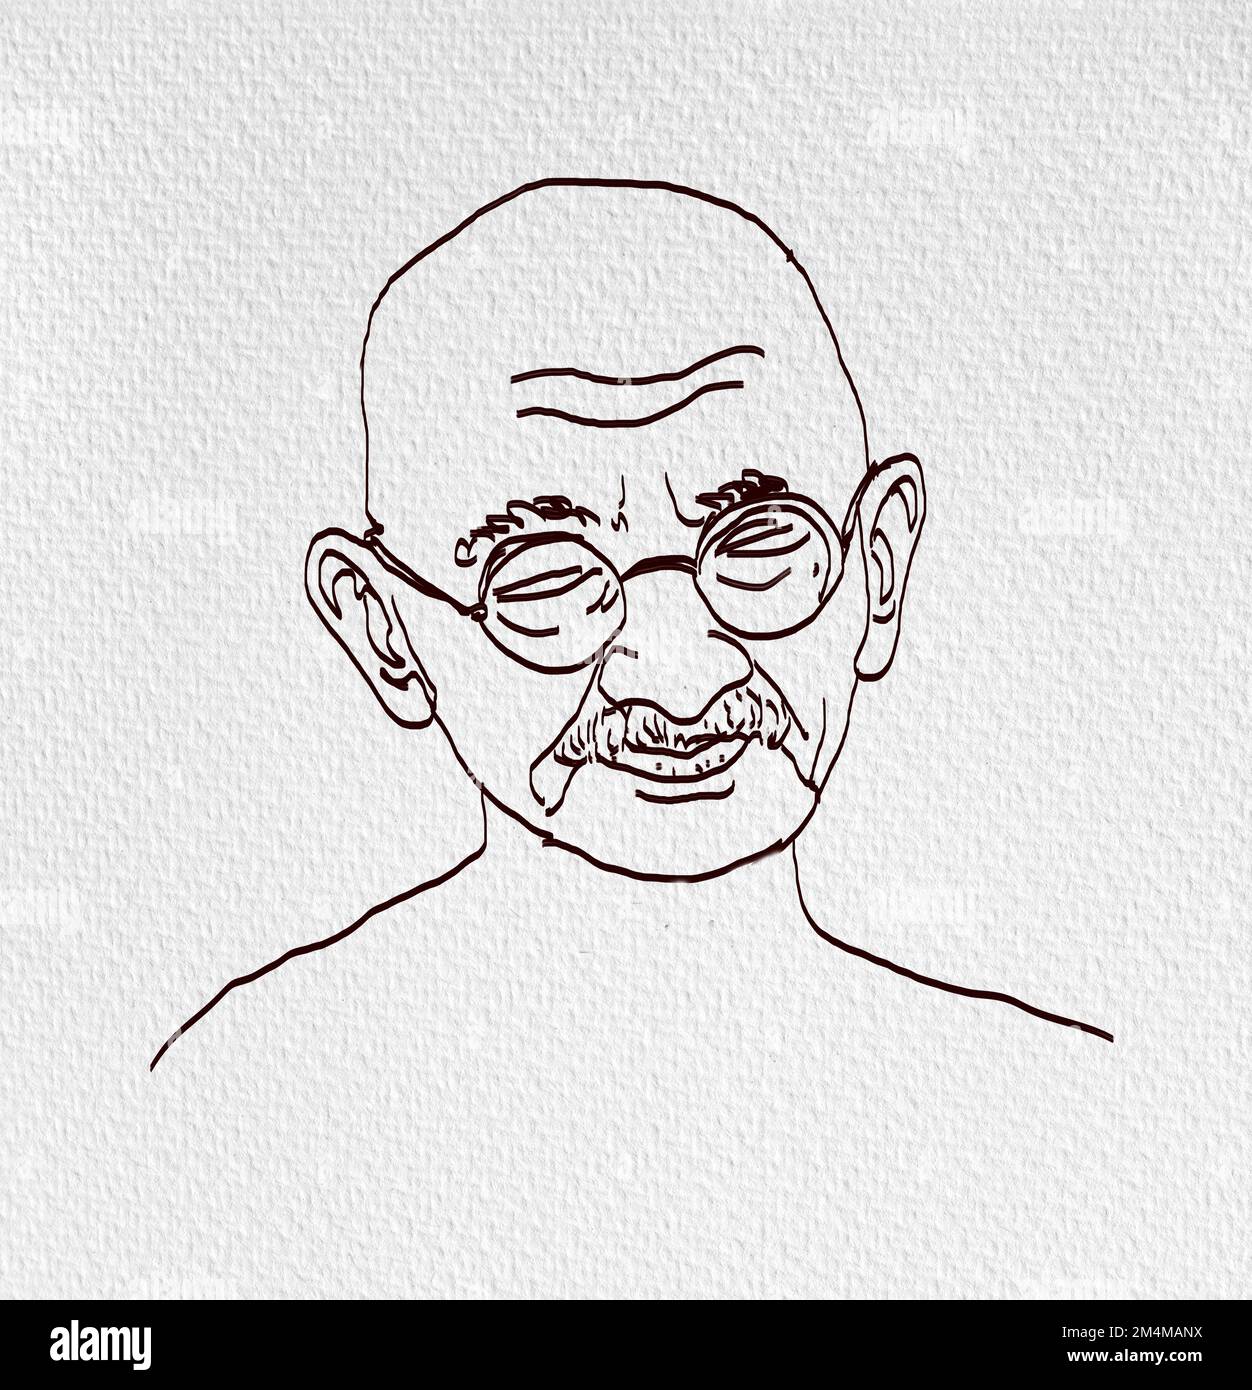 Graphics of Gandhi